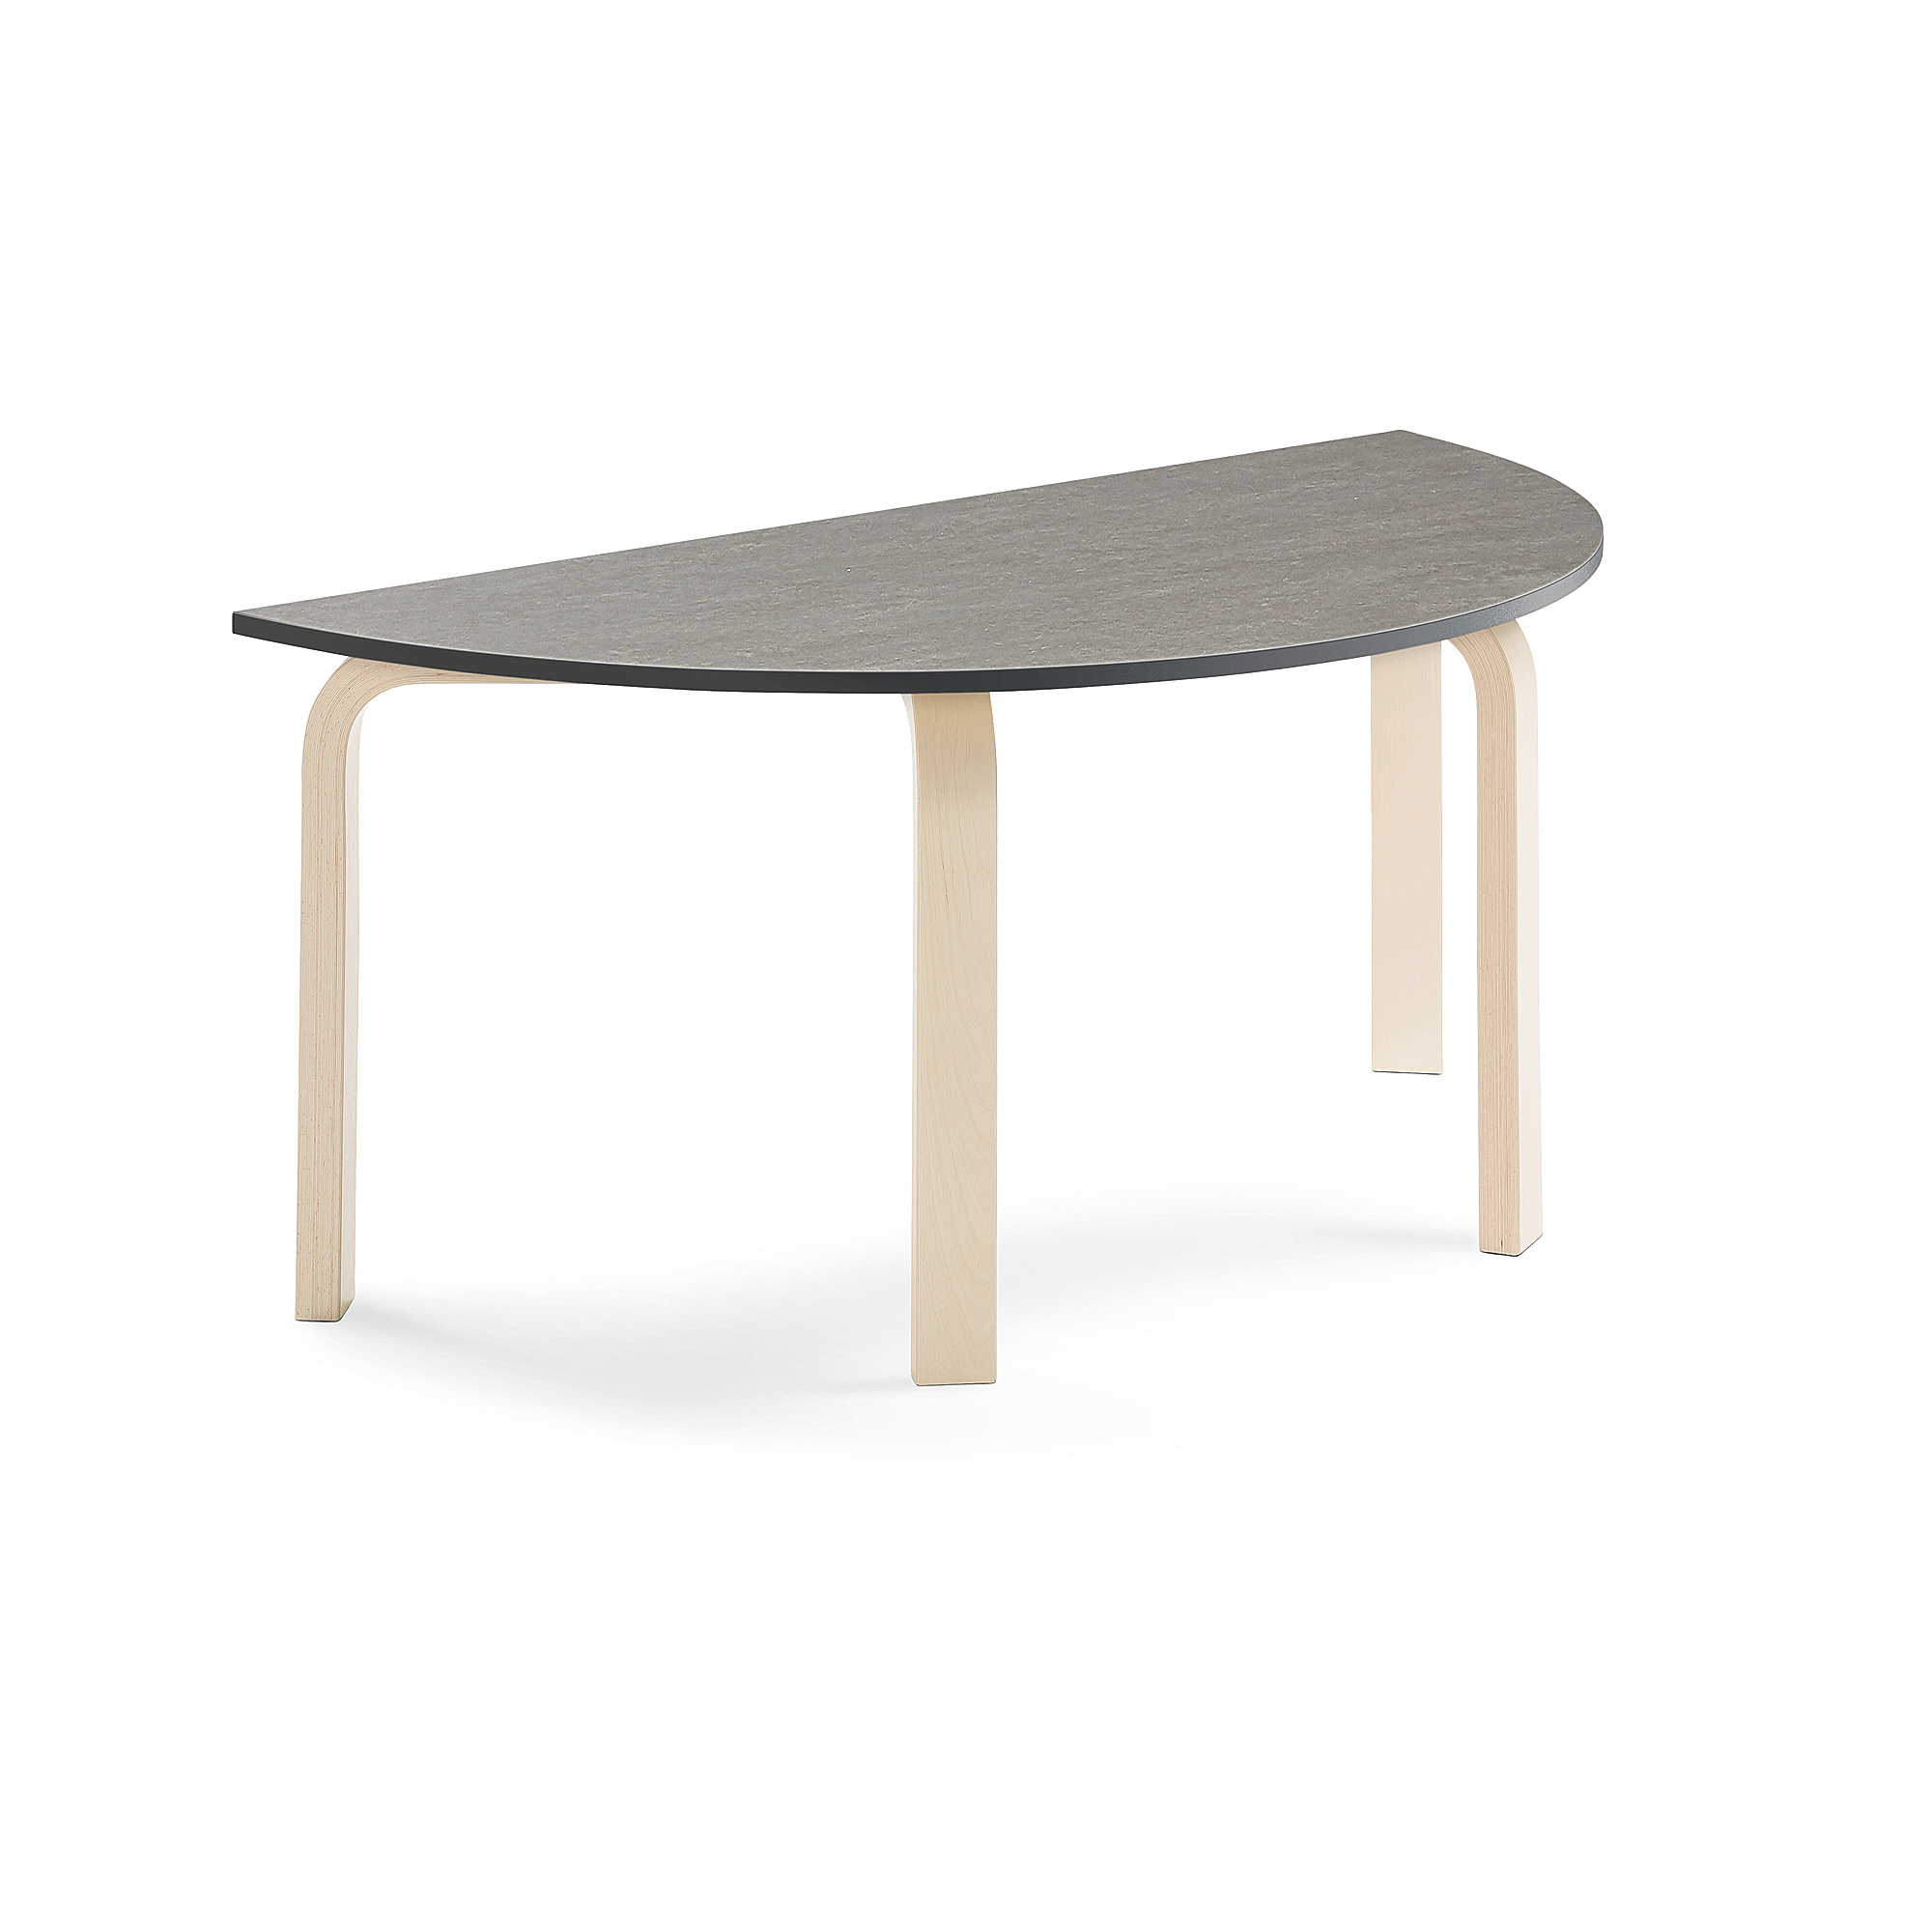 Stůl ELTON, půlkruh, 1200x600x530 mm, bříza, akustické linoleum, tmavě šedá